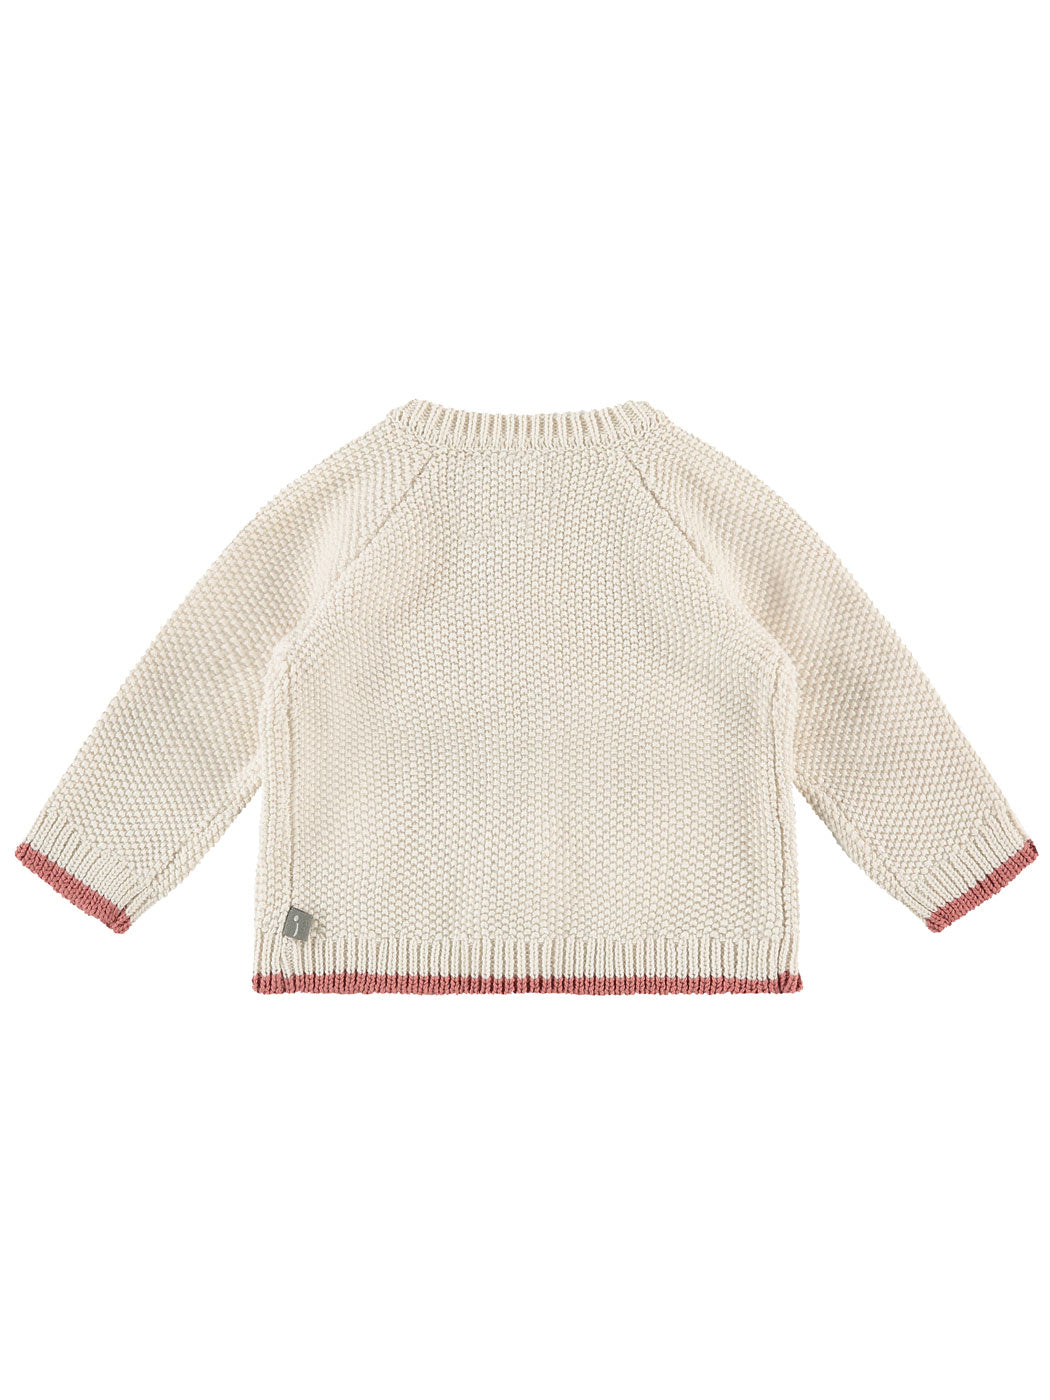 Babyface - Knitted Cardigan for newborn - NWB23228320 Cream